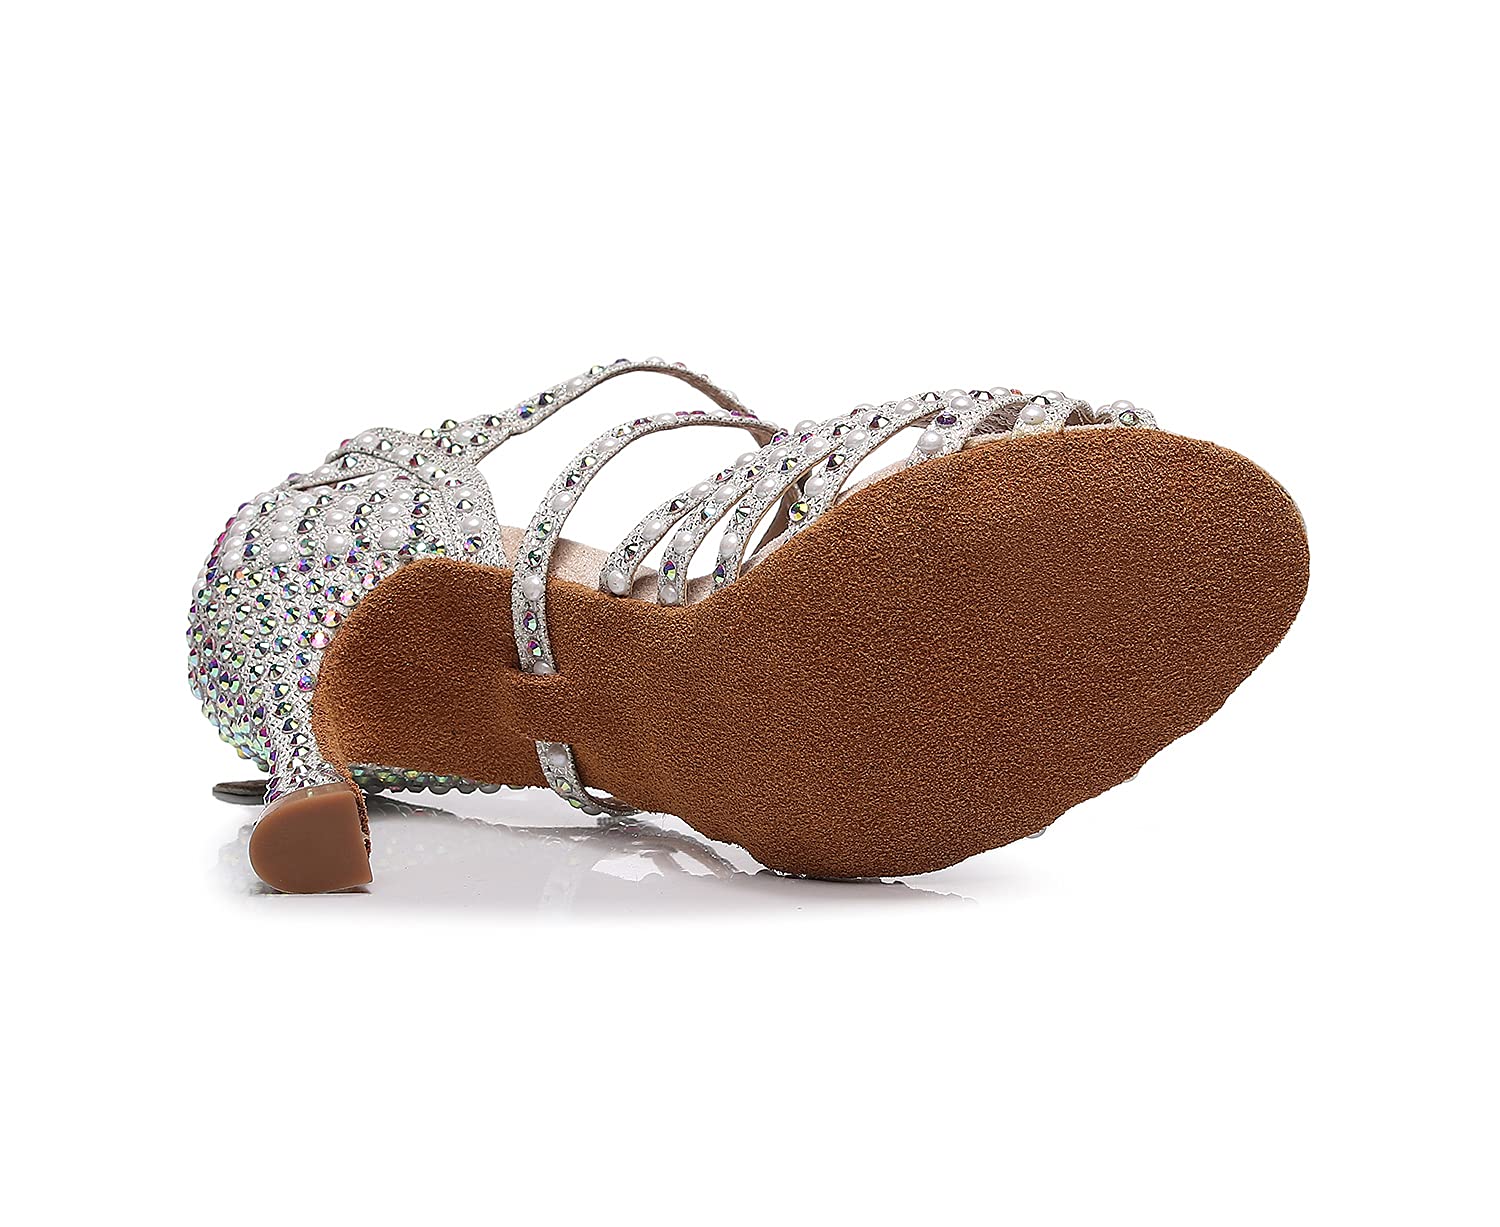 Goettin Latin Dance Shoes Salsa Wedding High Heel Shoes 3.35 inch Suede Sole Rhinestone Pumps Pearl Decoration for Women